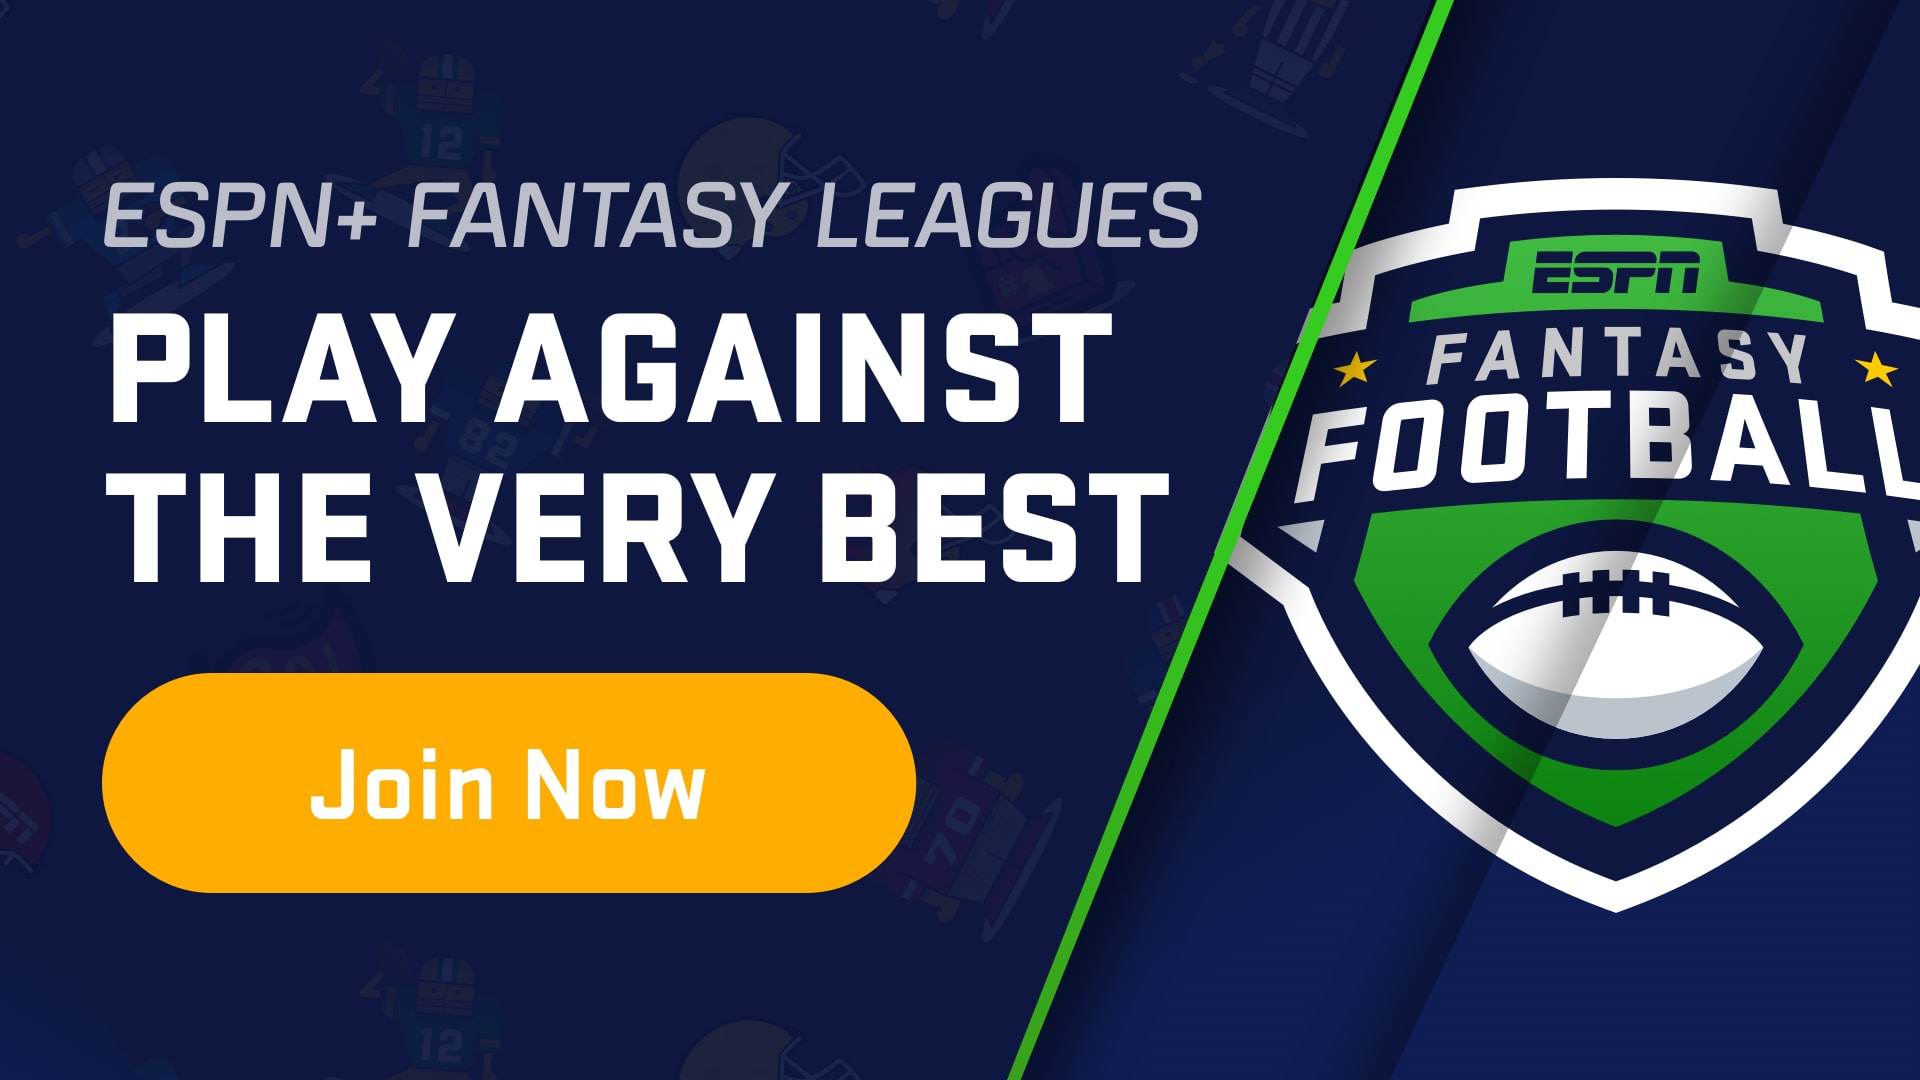 best fantasy football draft strategy 12 team league